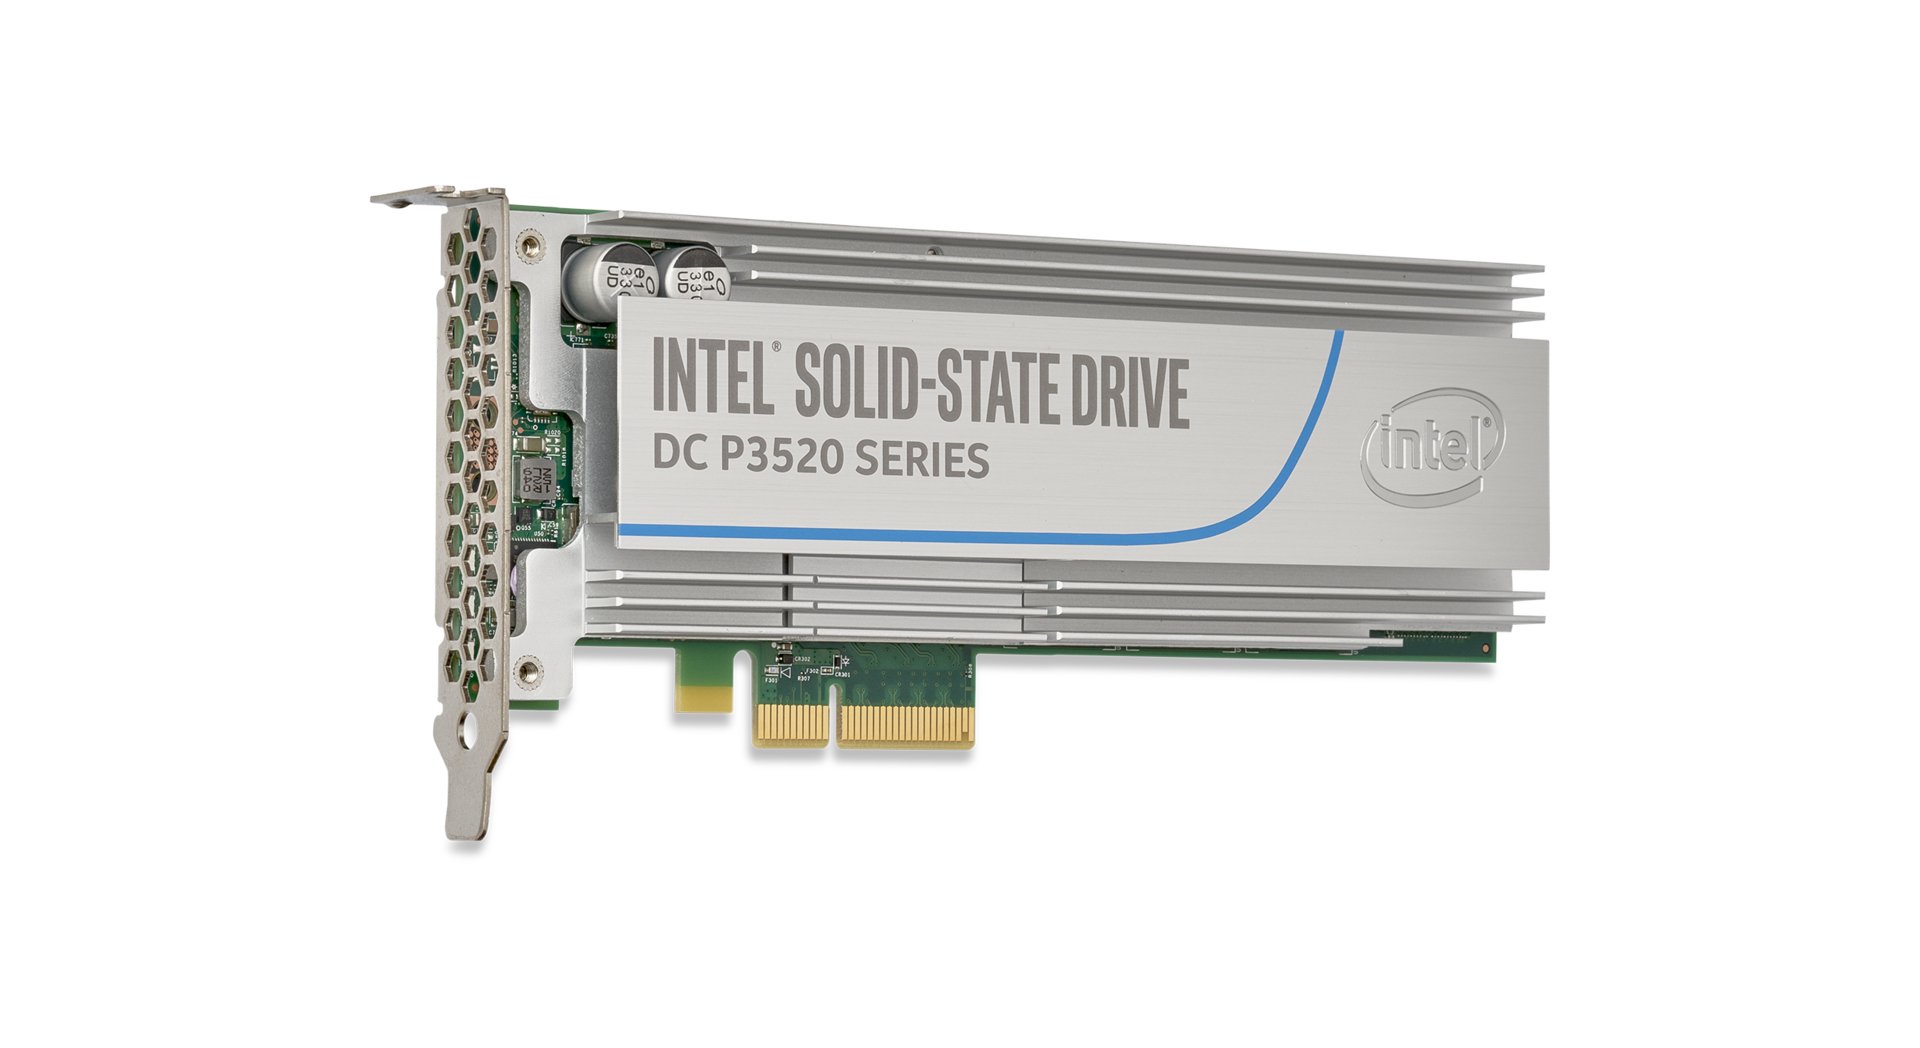 Intel SSD DC P3520 AIC